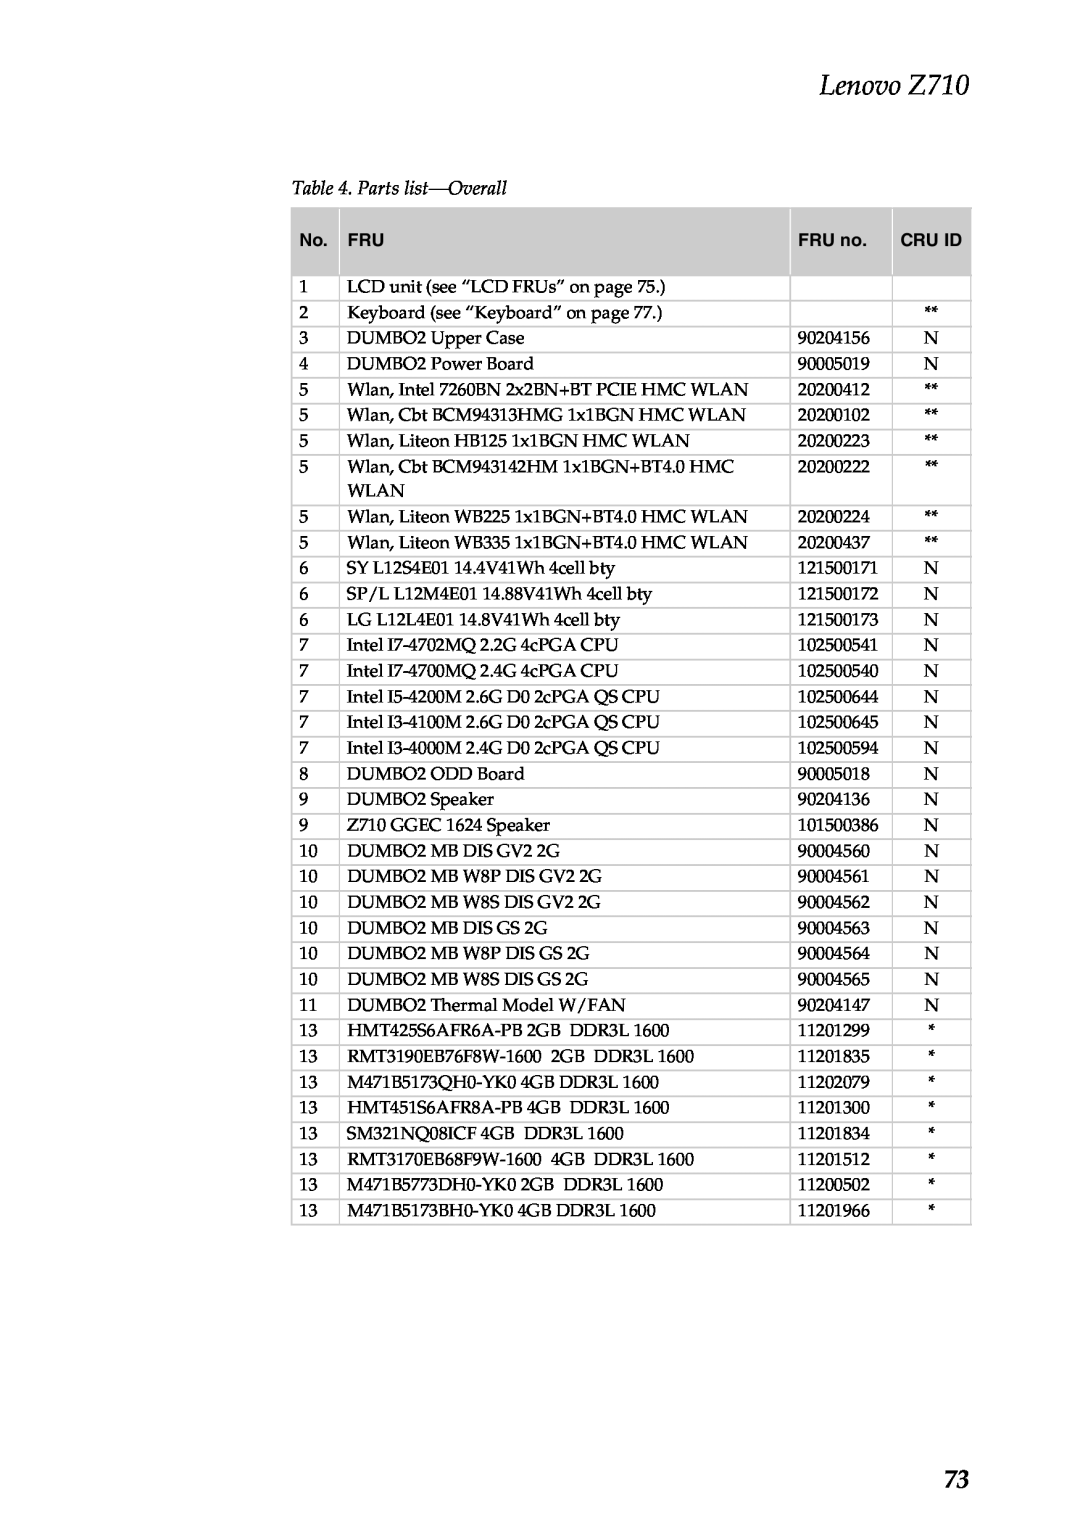 Lenovo manual Parts list-Overall, Lenovo Z710, FRU no, Cru Id 